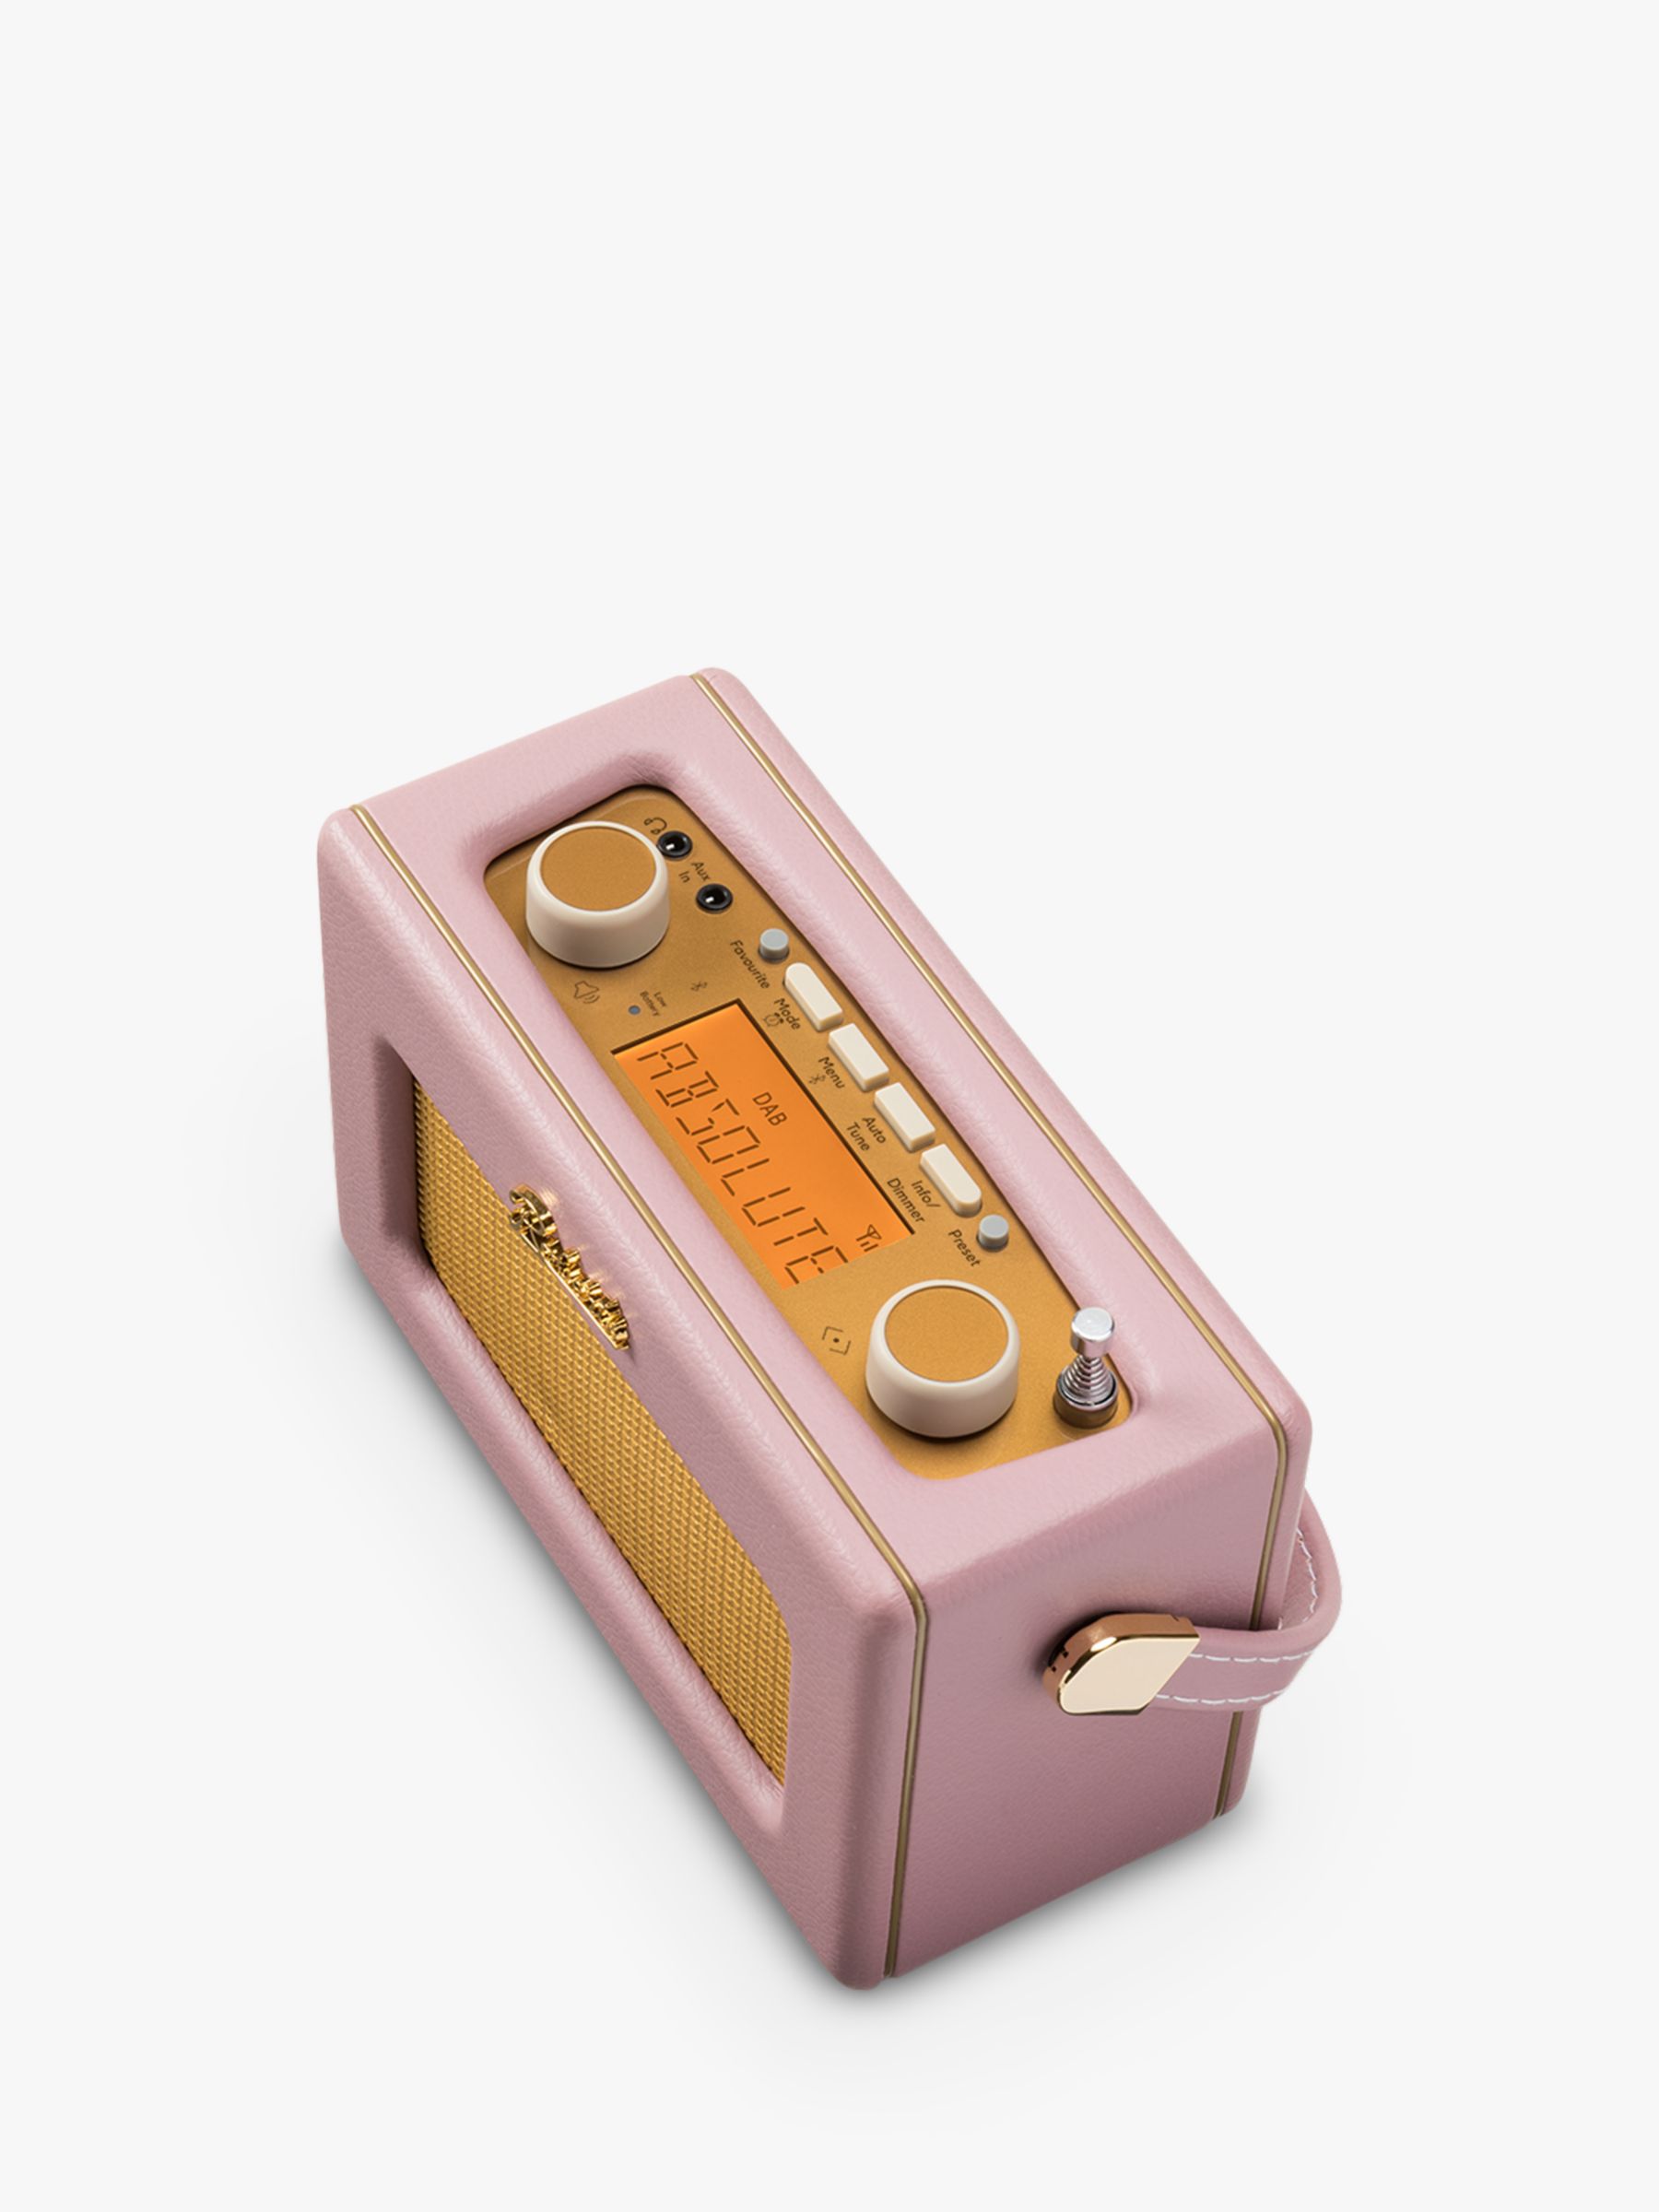 Roberts Revival Uno BT DAB/DAB+/FM Bluetooth Digital Radio with Alarm, Pastel  Cream